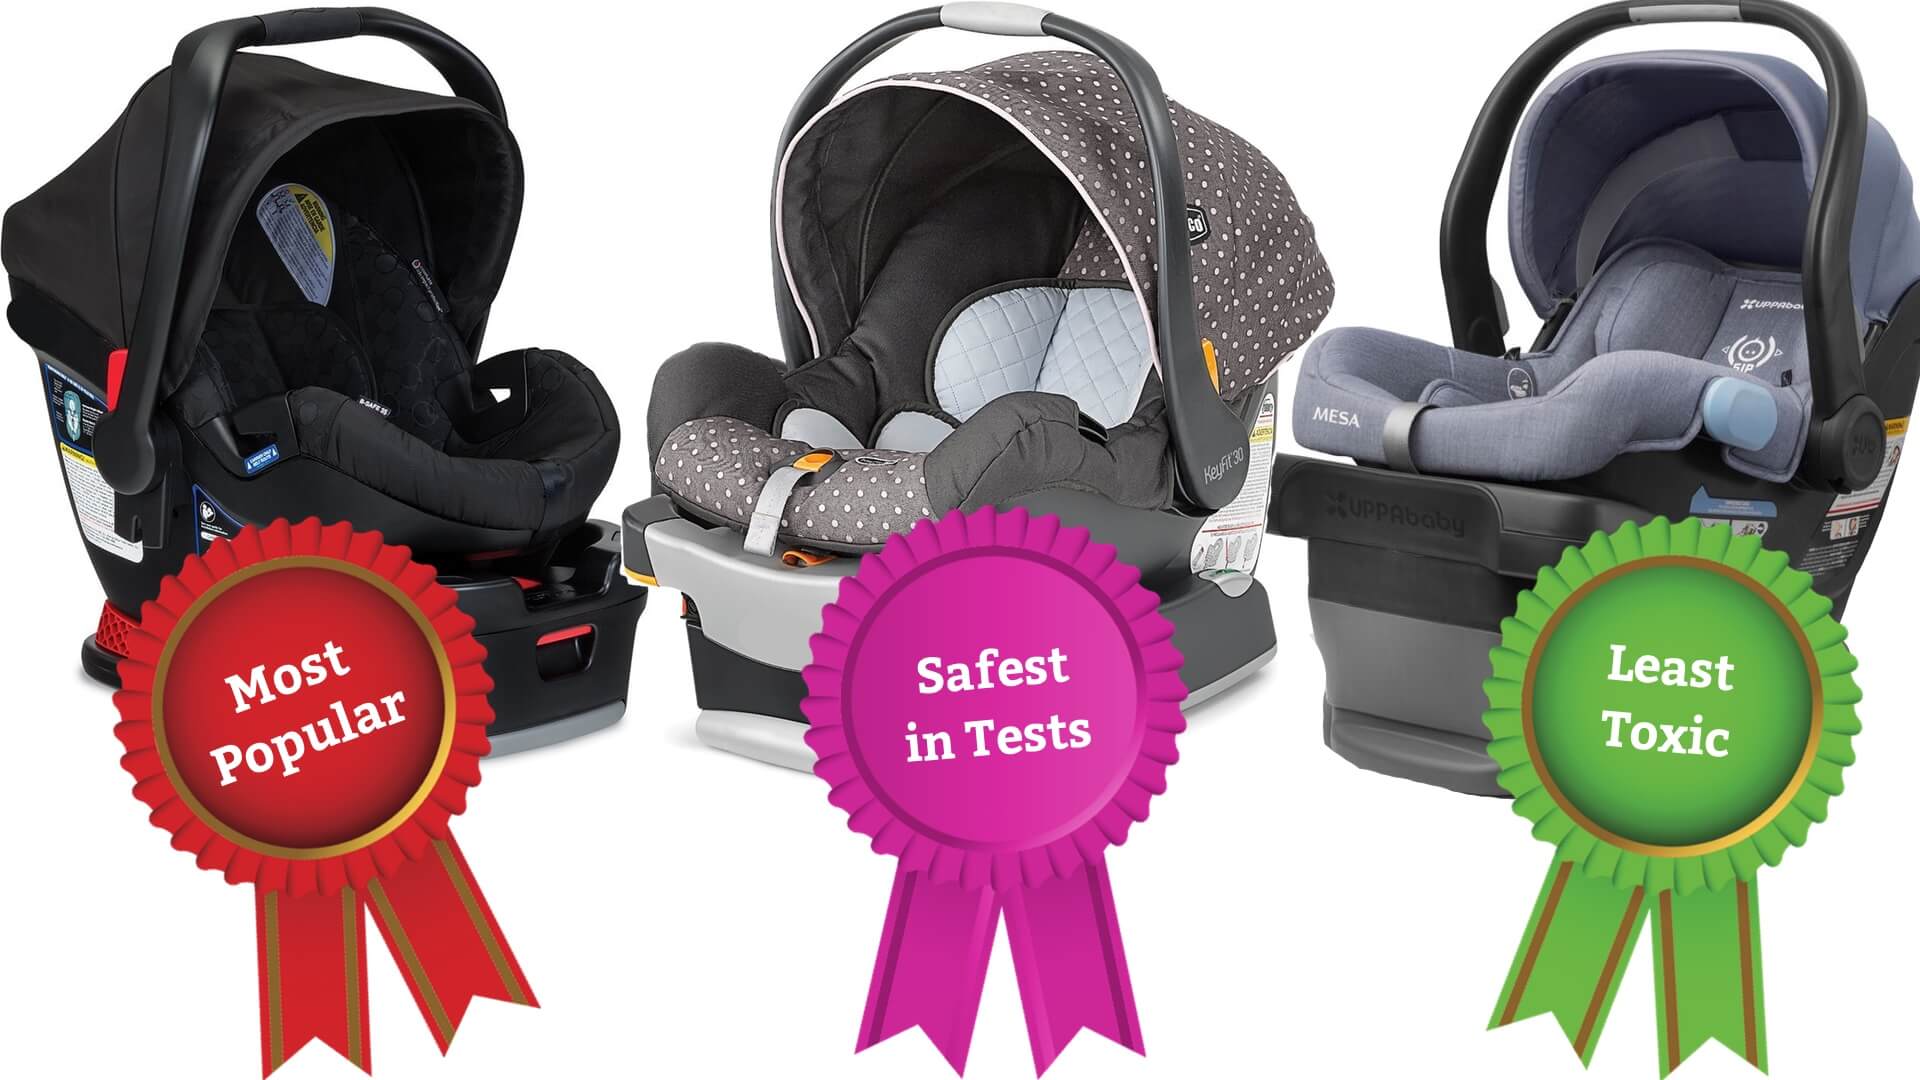 Best Infant Car Seat Safest Most Natural Options - What Is The Safest Rated Infant Car Seat